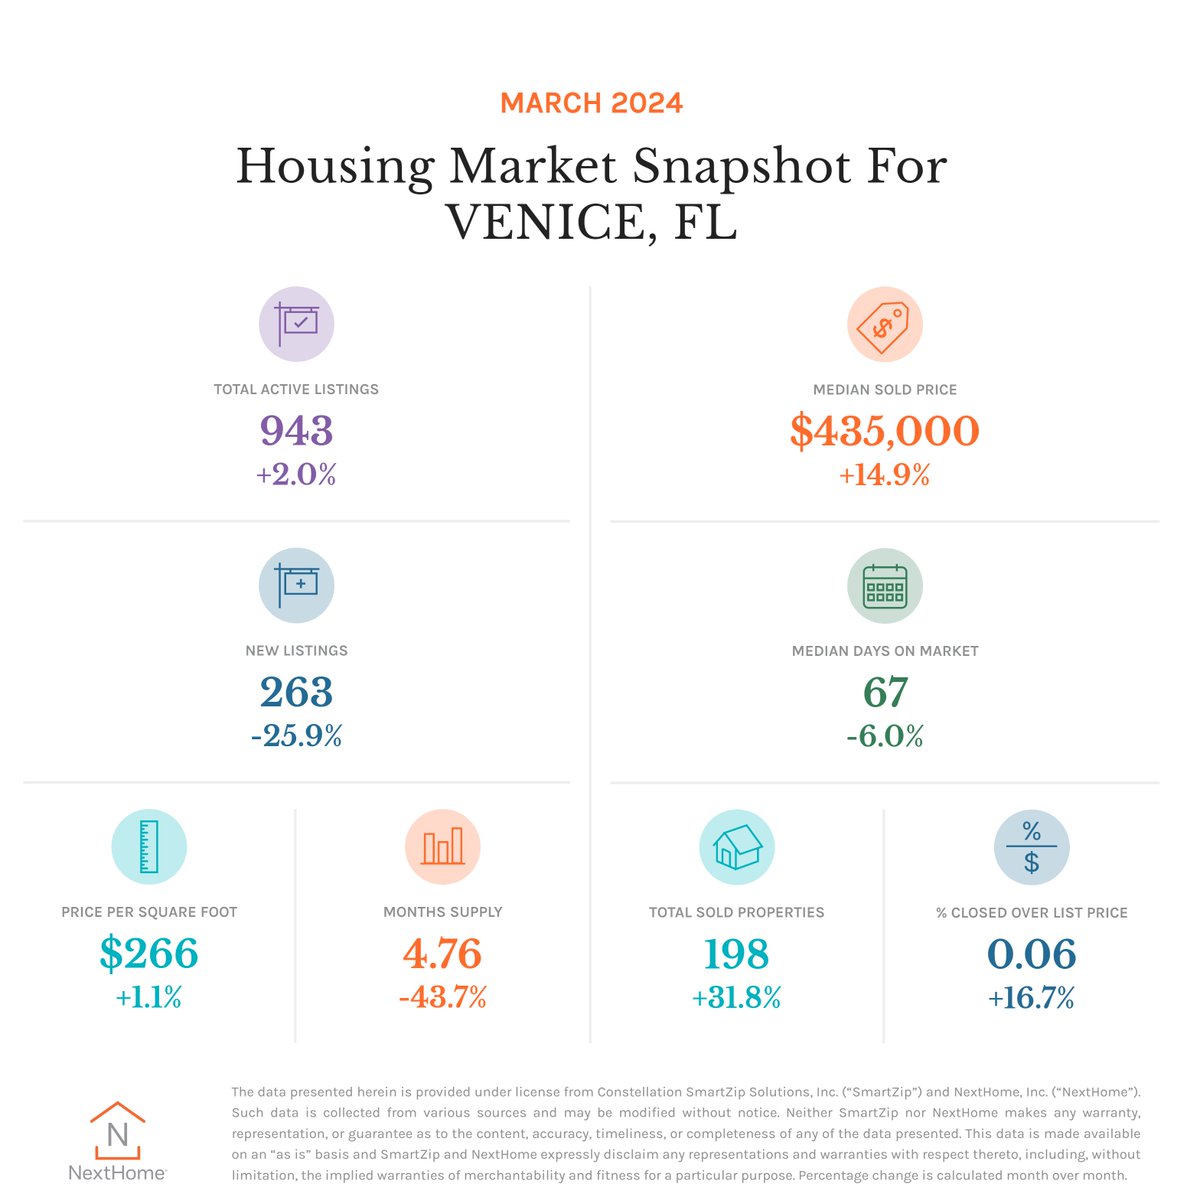 Check out the latest Housing Market Update for Venice, FL.

#MondayMarketUpdate #VeniceFlorida #VeniceFL #Venice #Florida #suncoast #buying #selling #listing #realestate #housingmarket #NextHomeSuncoast